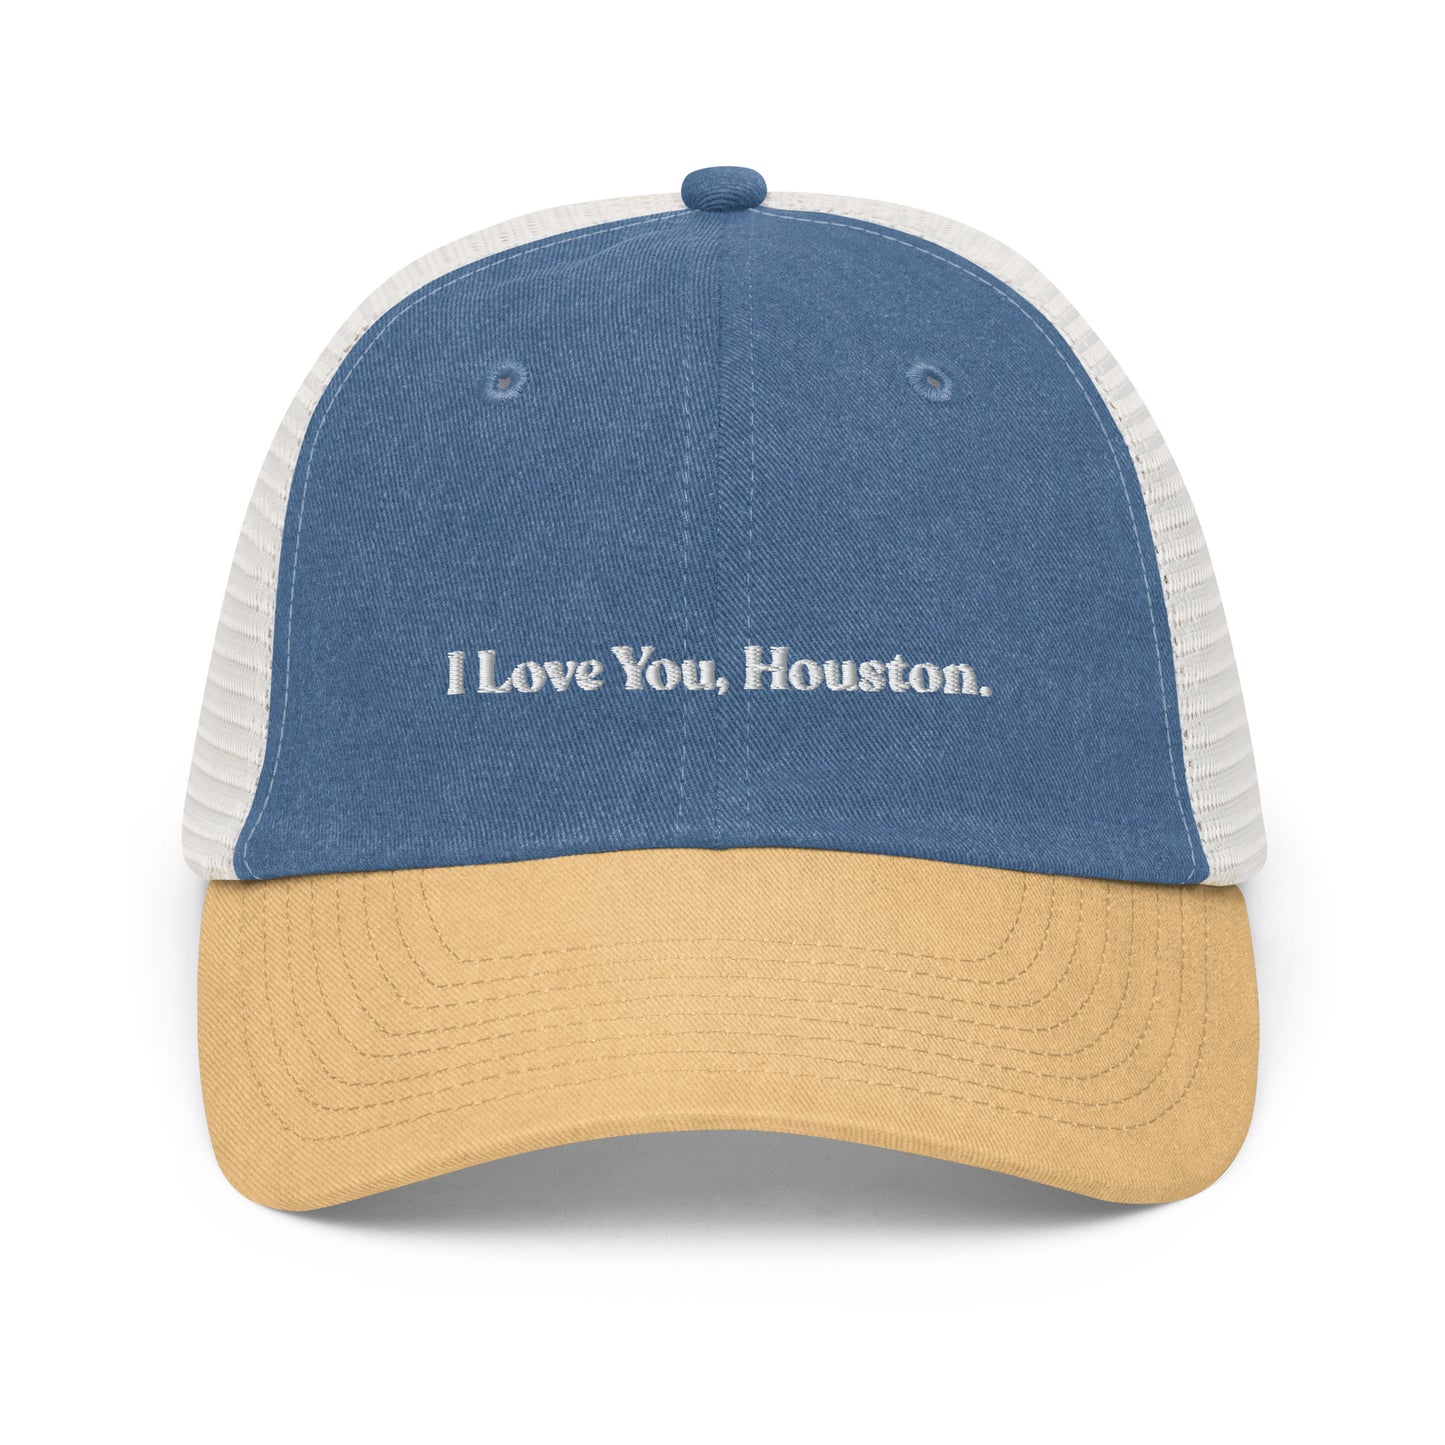 I Love You, Houston Two-Tone Hat